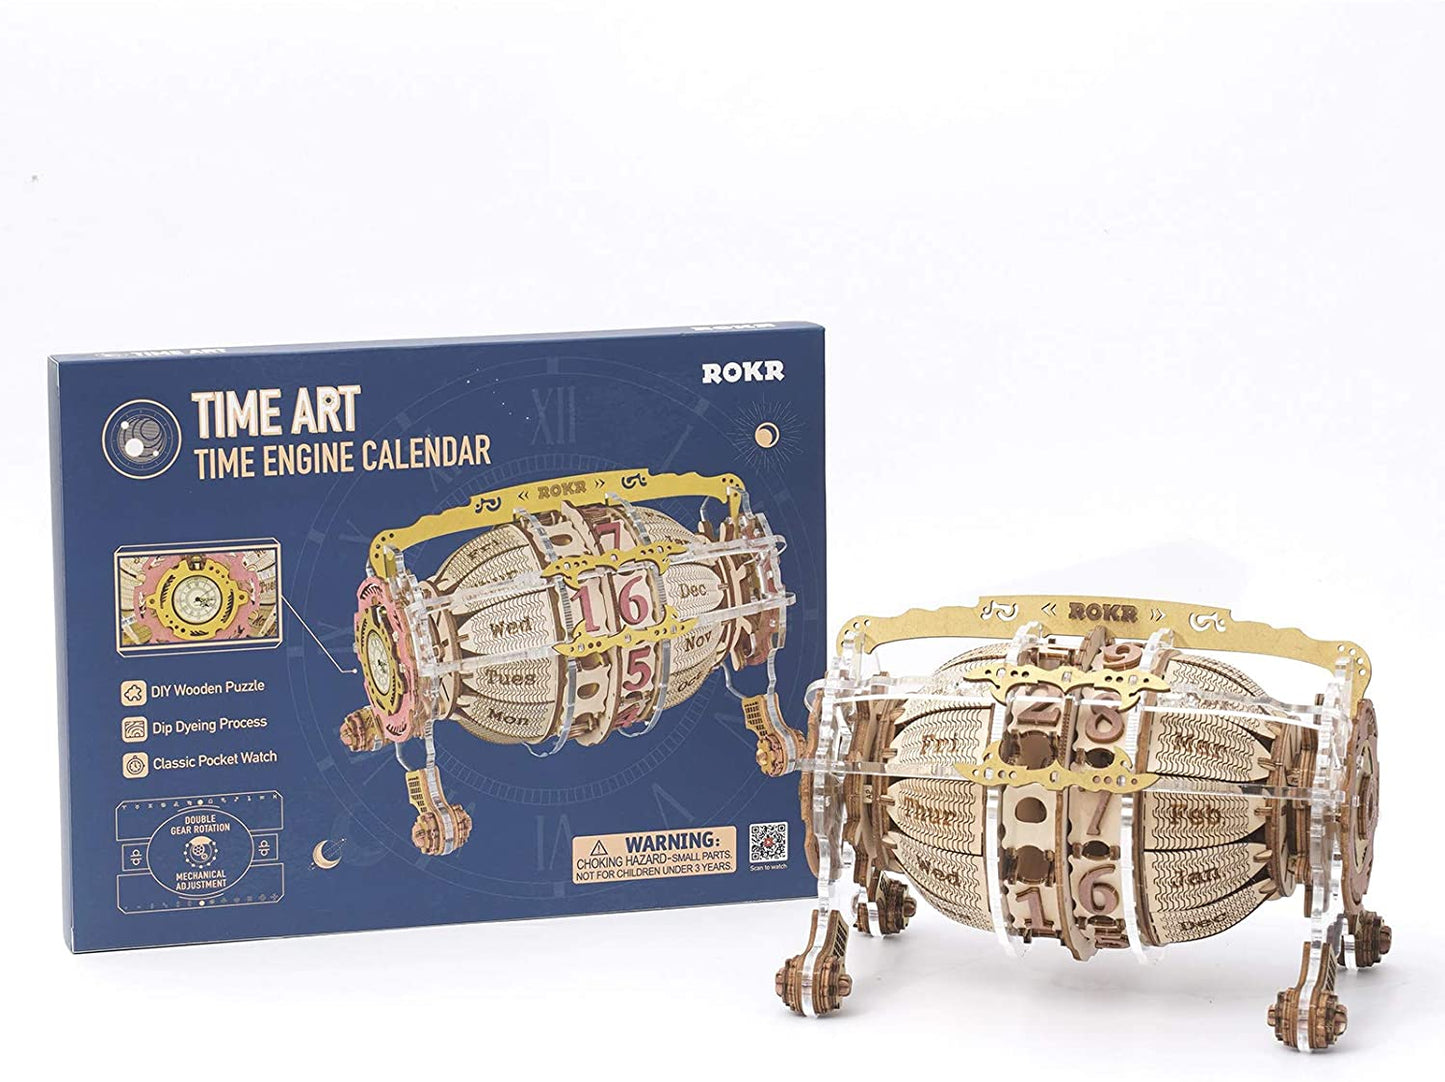 Time Air Time Engine Calendar - Robotime ROKR Time Engine 3D Wooden Model Building Block Kits DIY Assembly Toy Gift for Children Kids Adult LC801